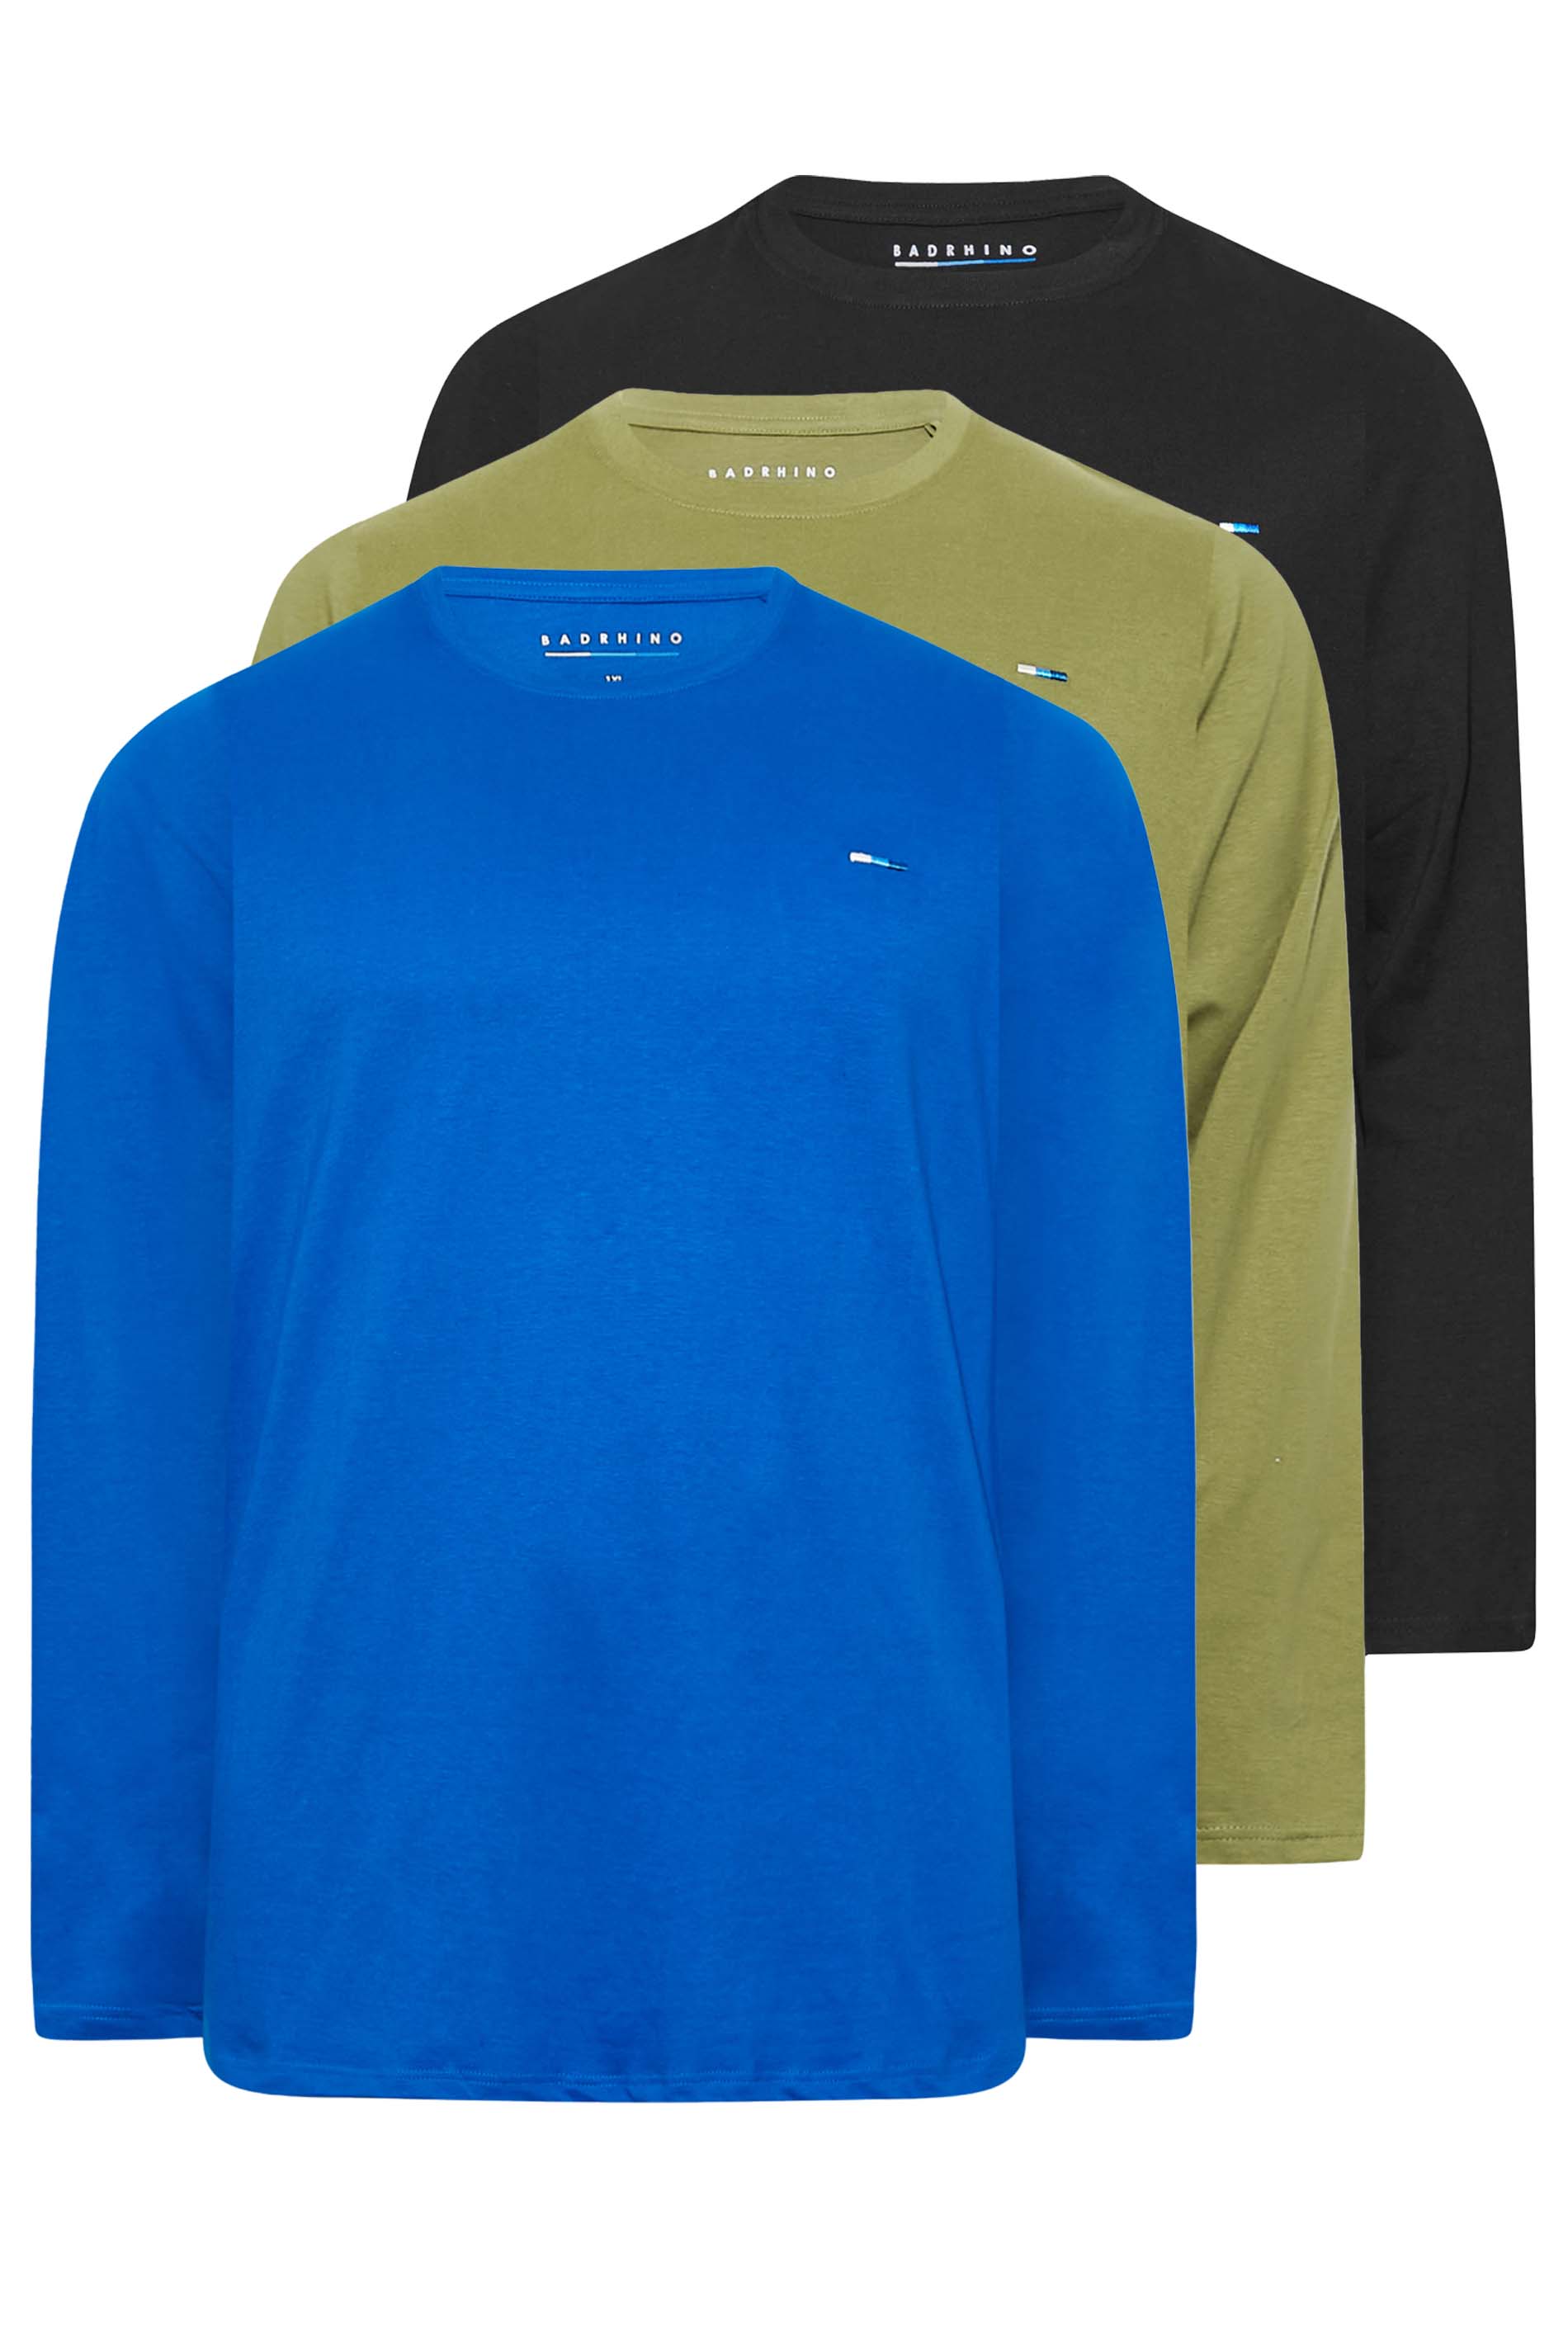 BadRhino Big & Tall 3 Pack Blue & Khaki Green Long Sleeve T-Shirts | BadRhino 2